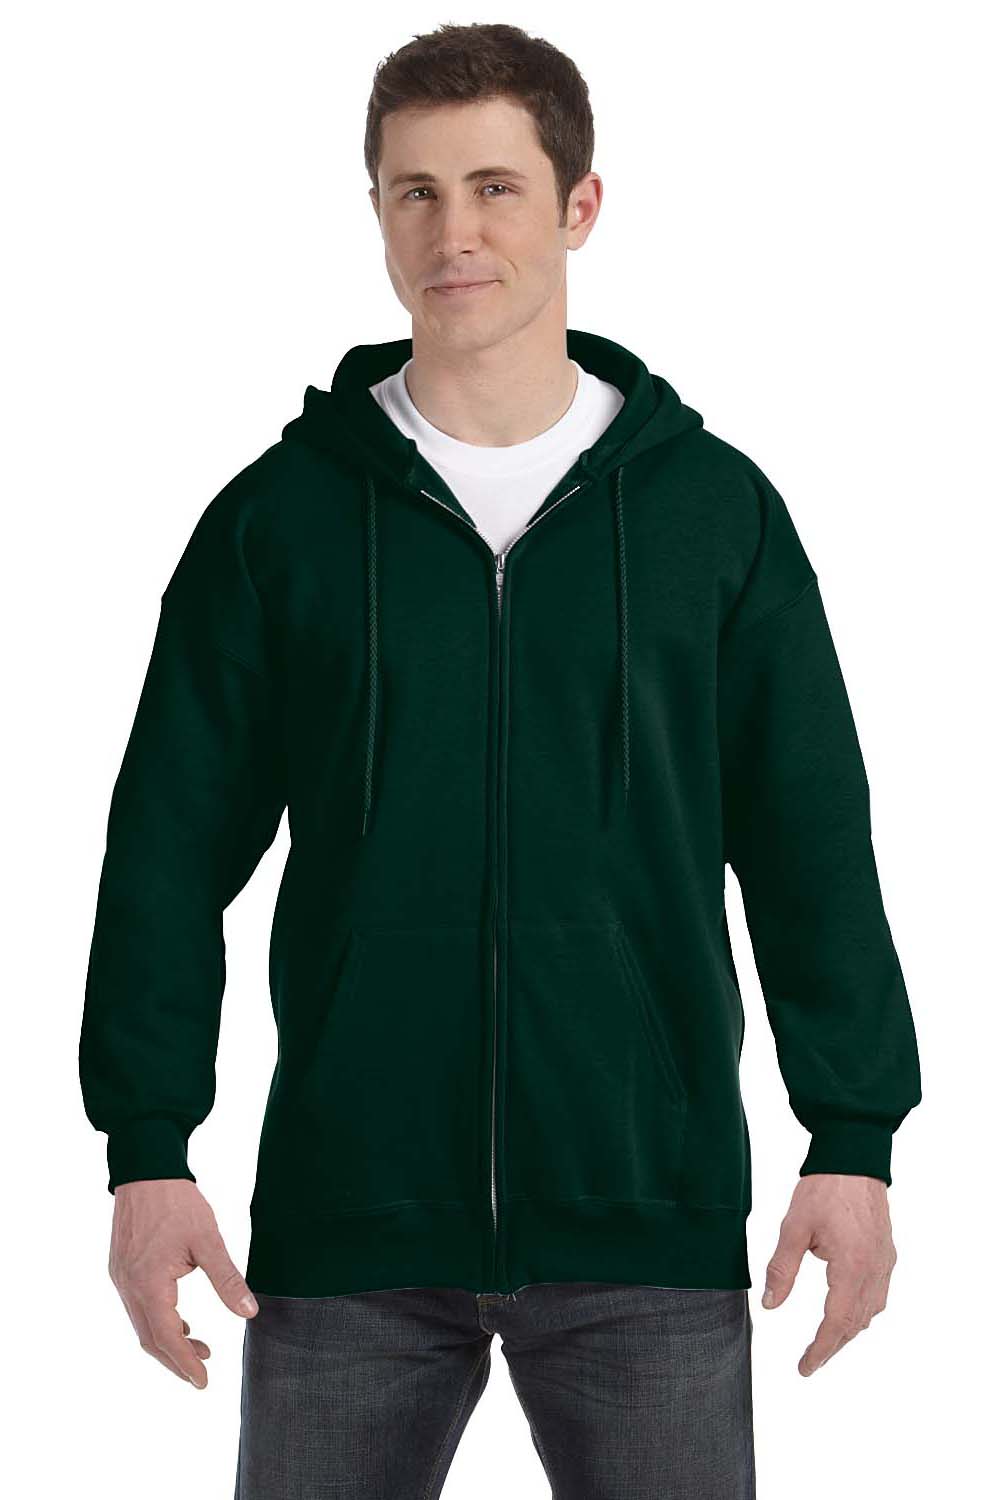 Hanes F280 Mens Ultimate Cotton PrintPro XP Full Zip Hooded Sweatshirt Hoodie Forest Green Front